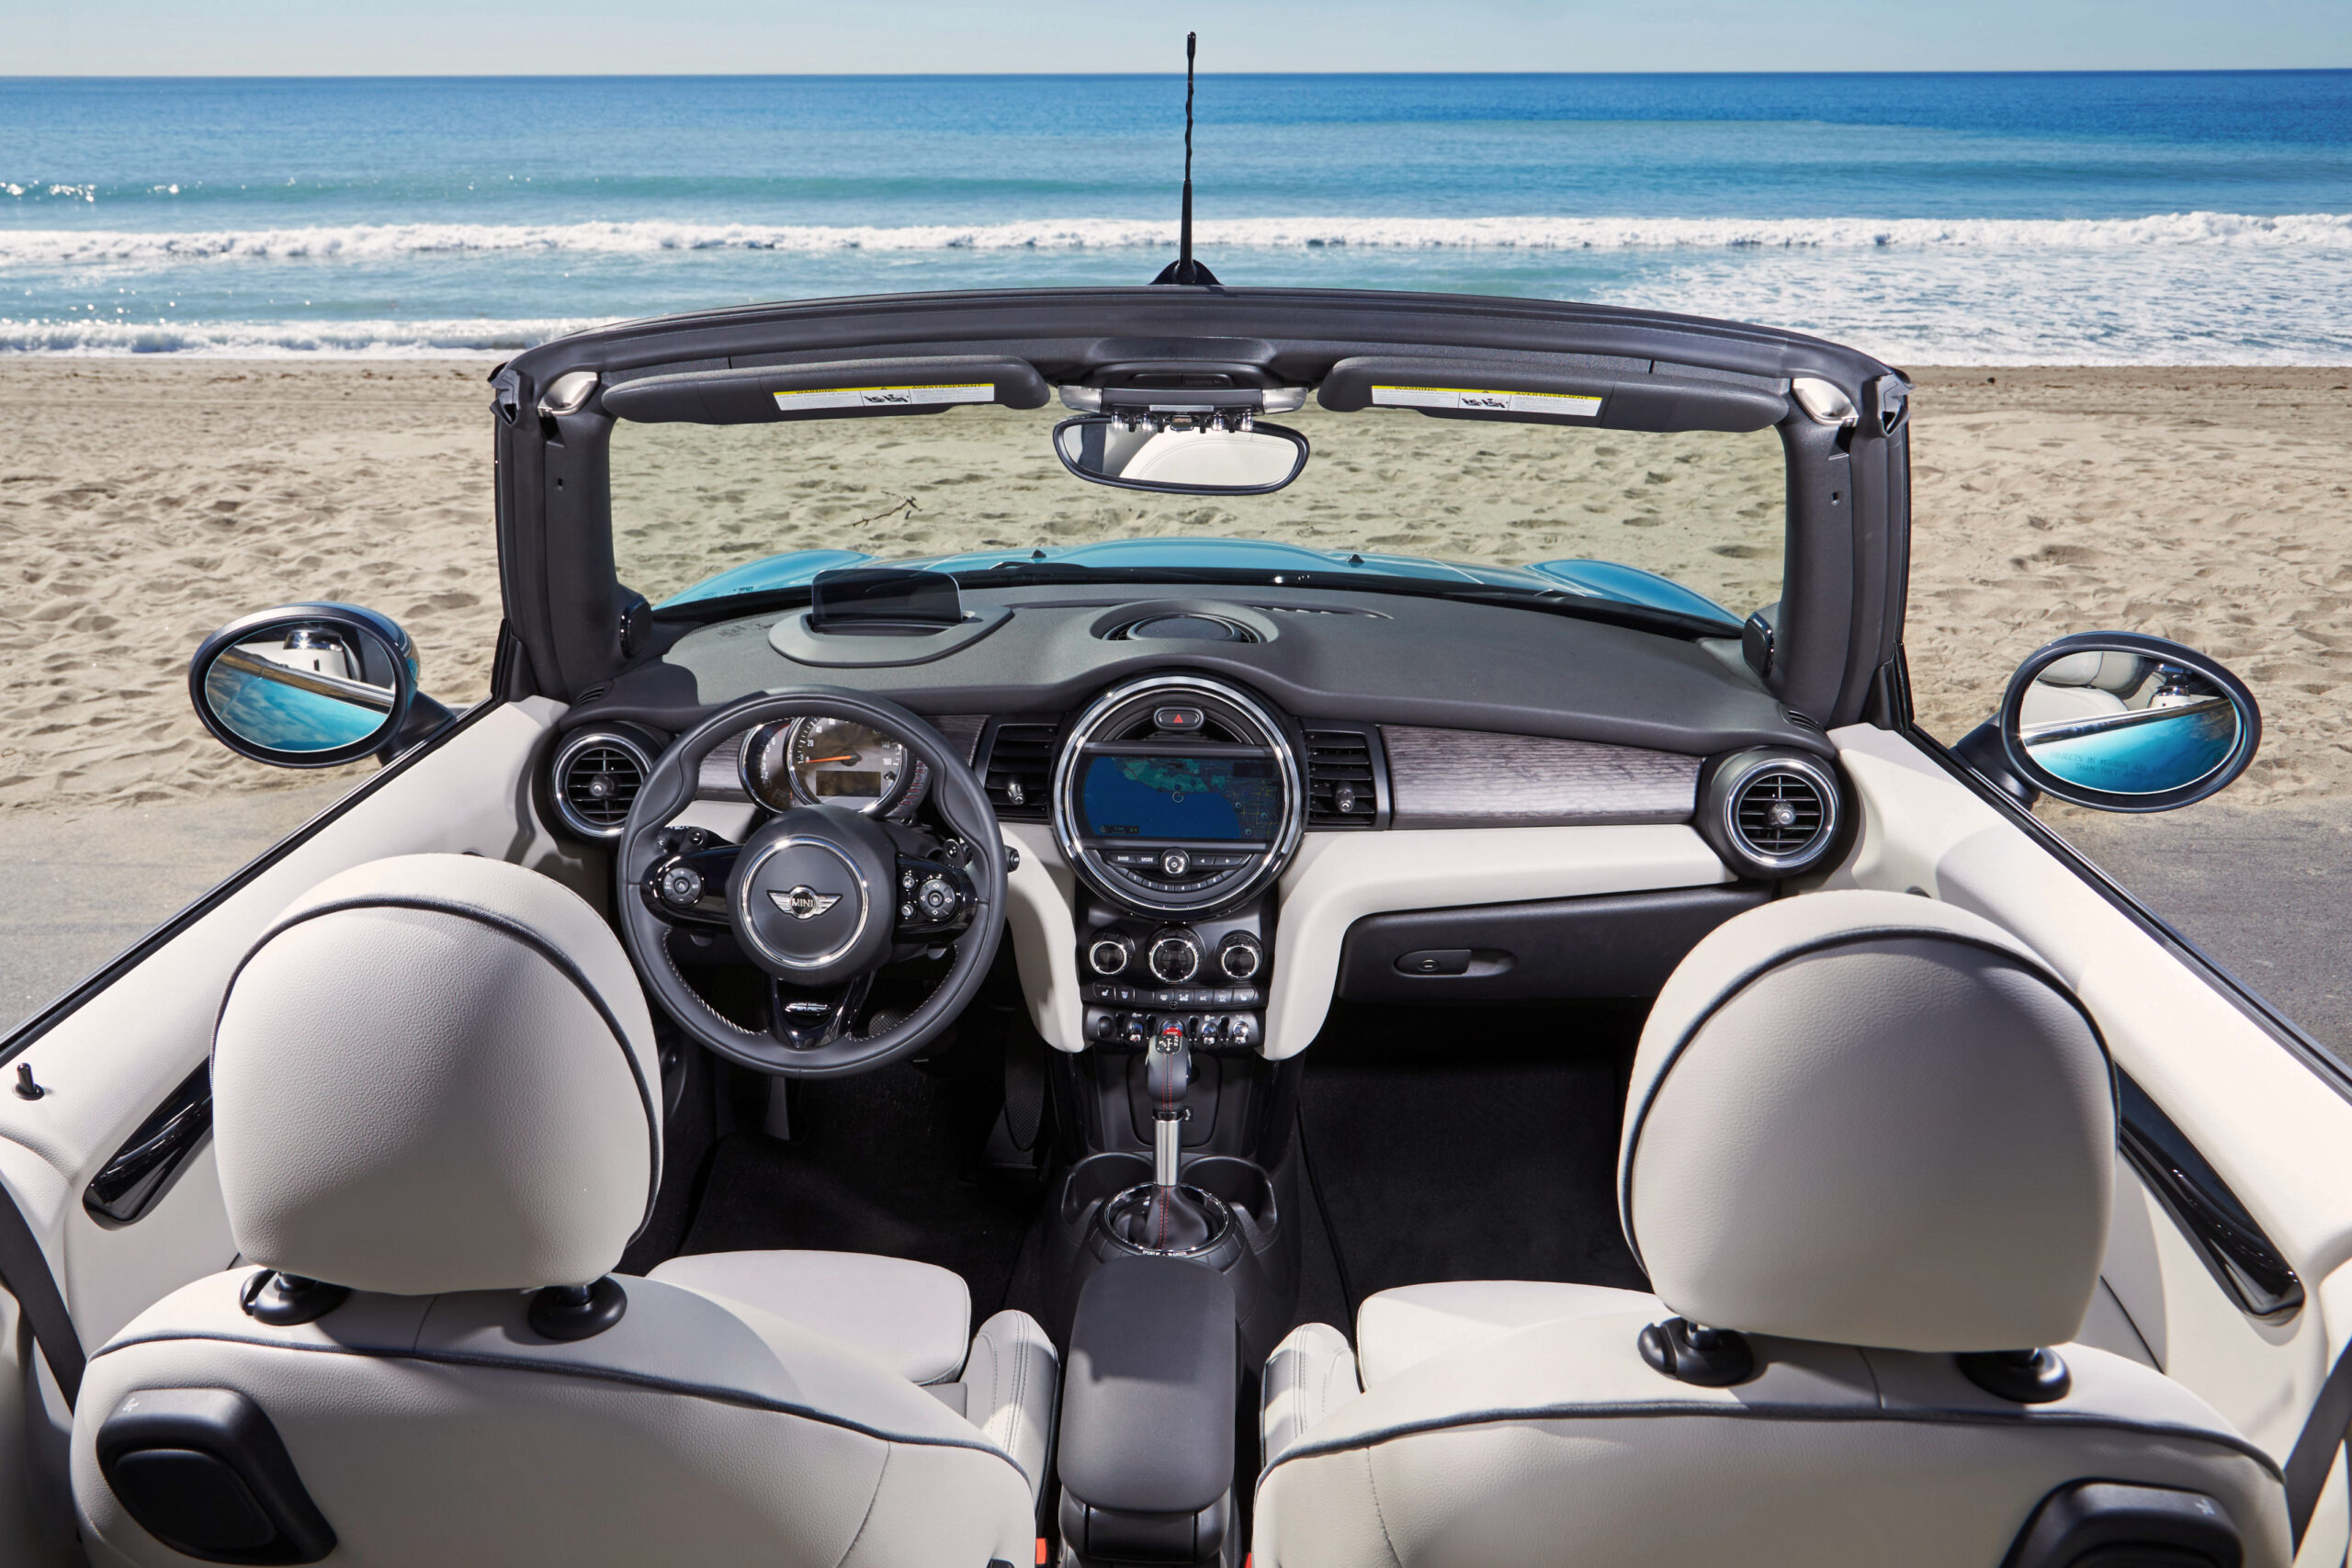 2021 Mini Cooper Convertible white ivory interior, Aqua Caribbean blue exterior -  facing beach


BEST Road-Trip Cars of 2020